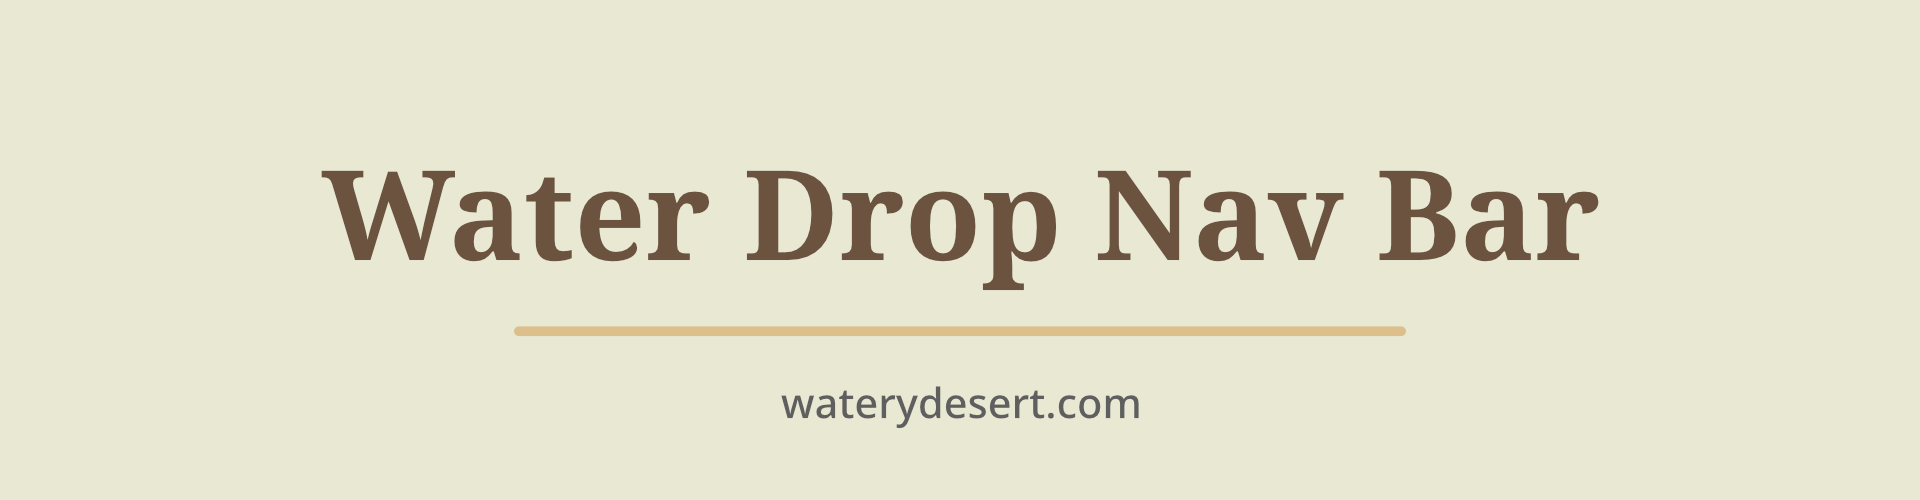 Water Drop Nav Bar